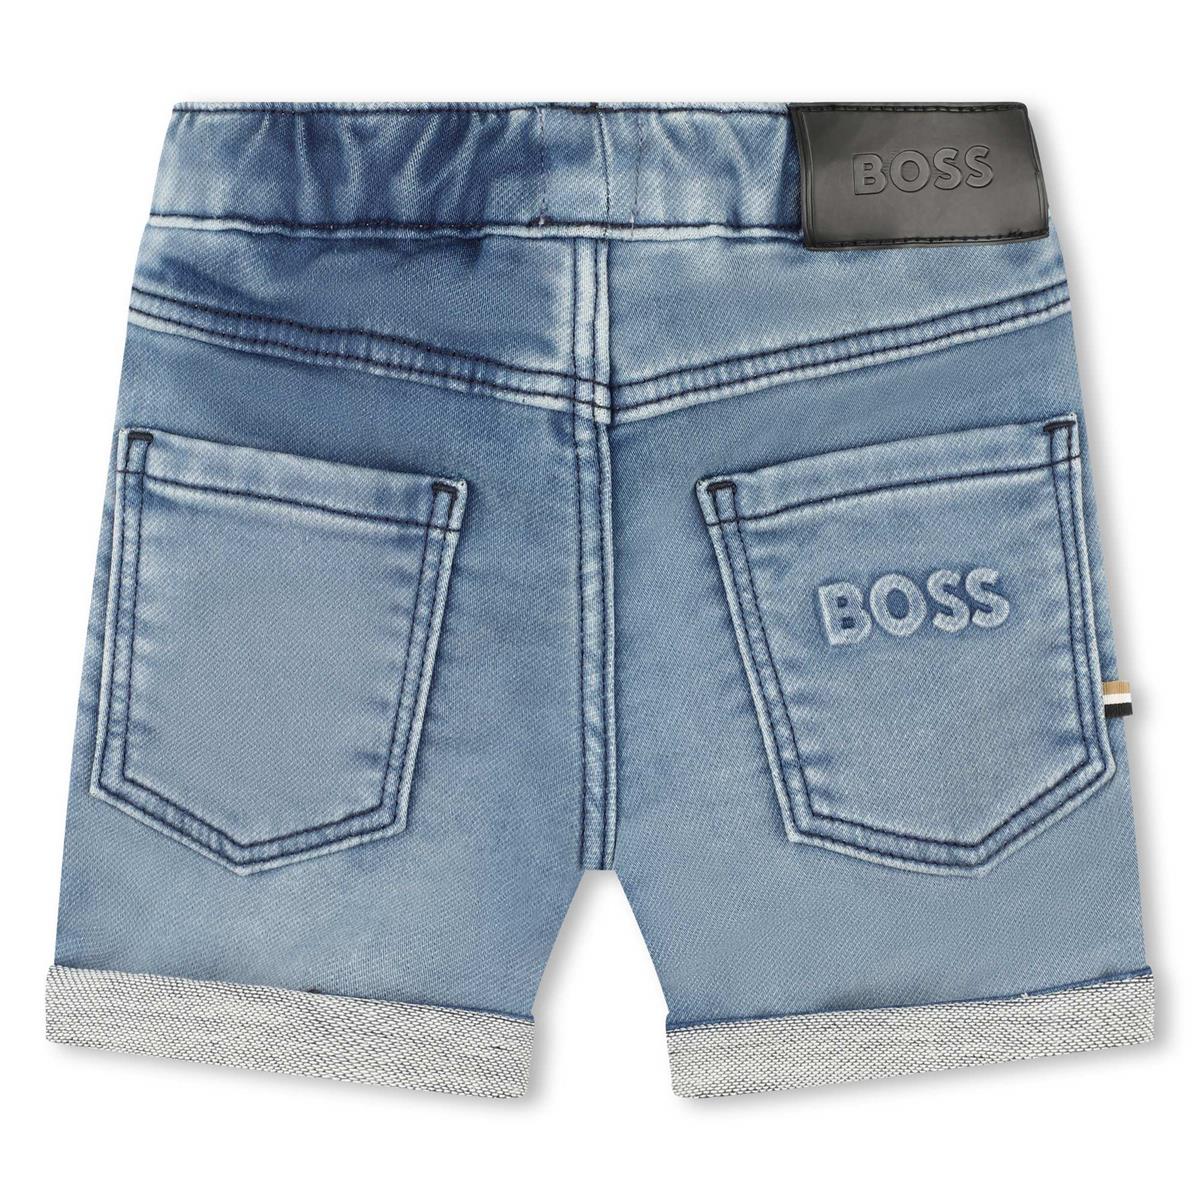 Baby Boys Blue Denim Shorts